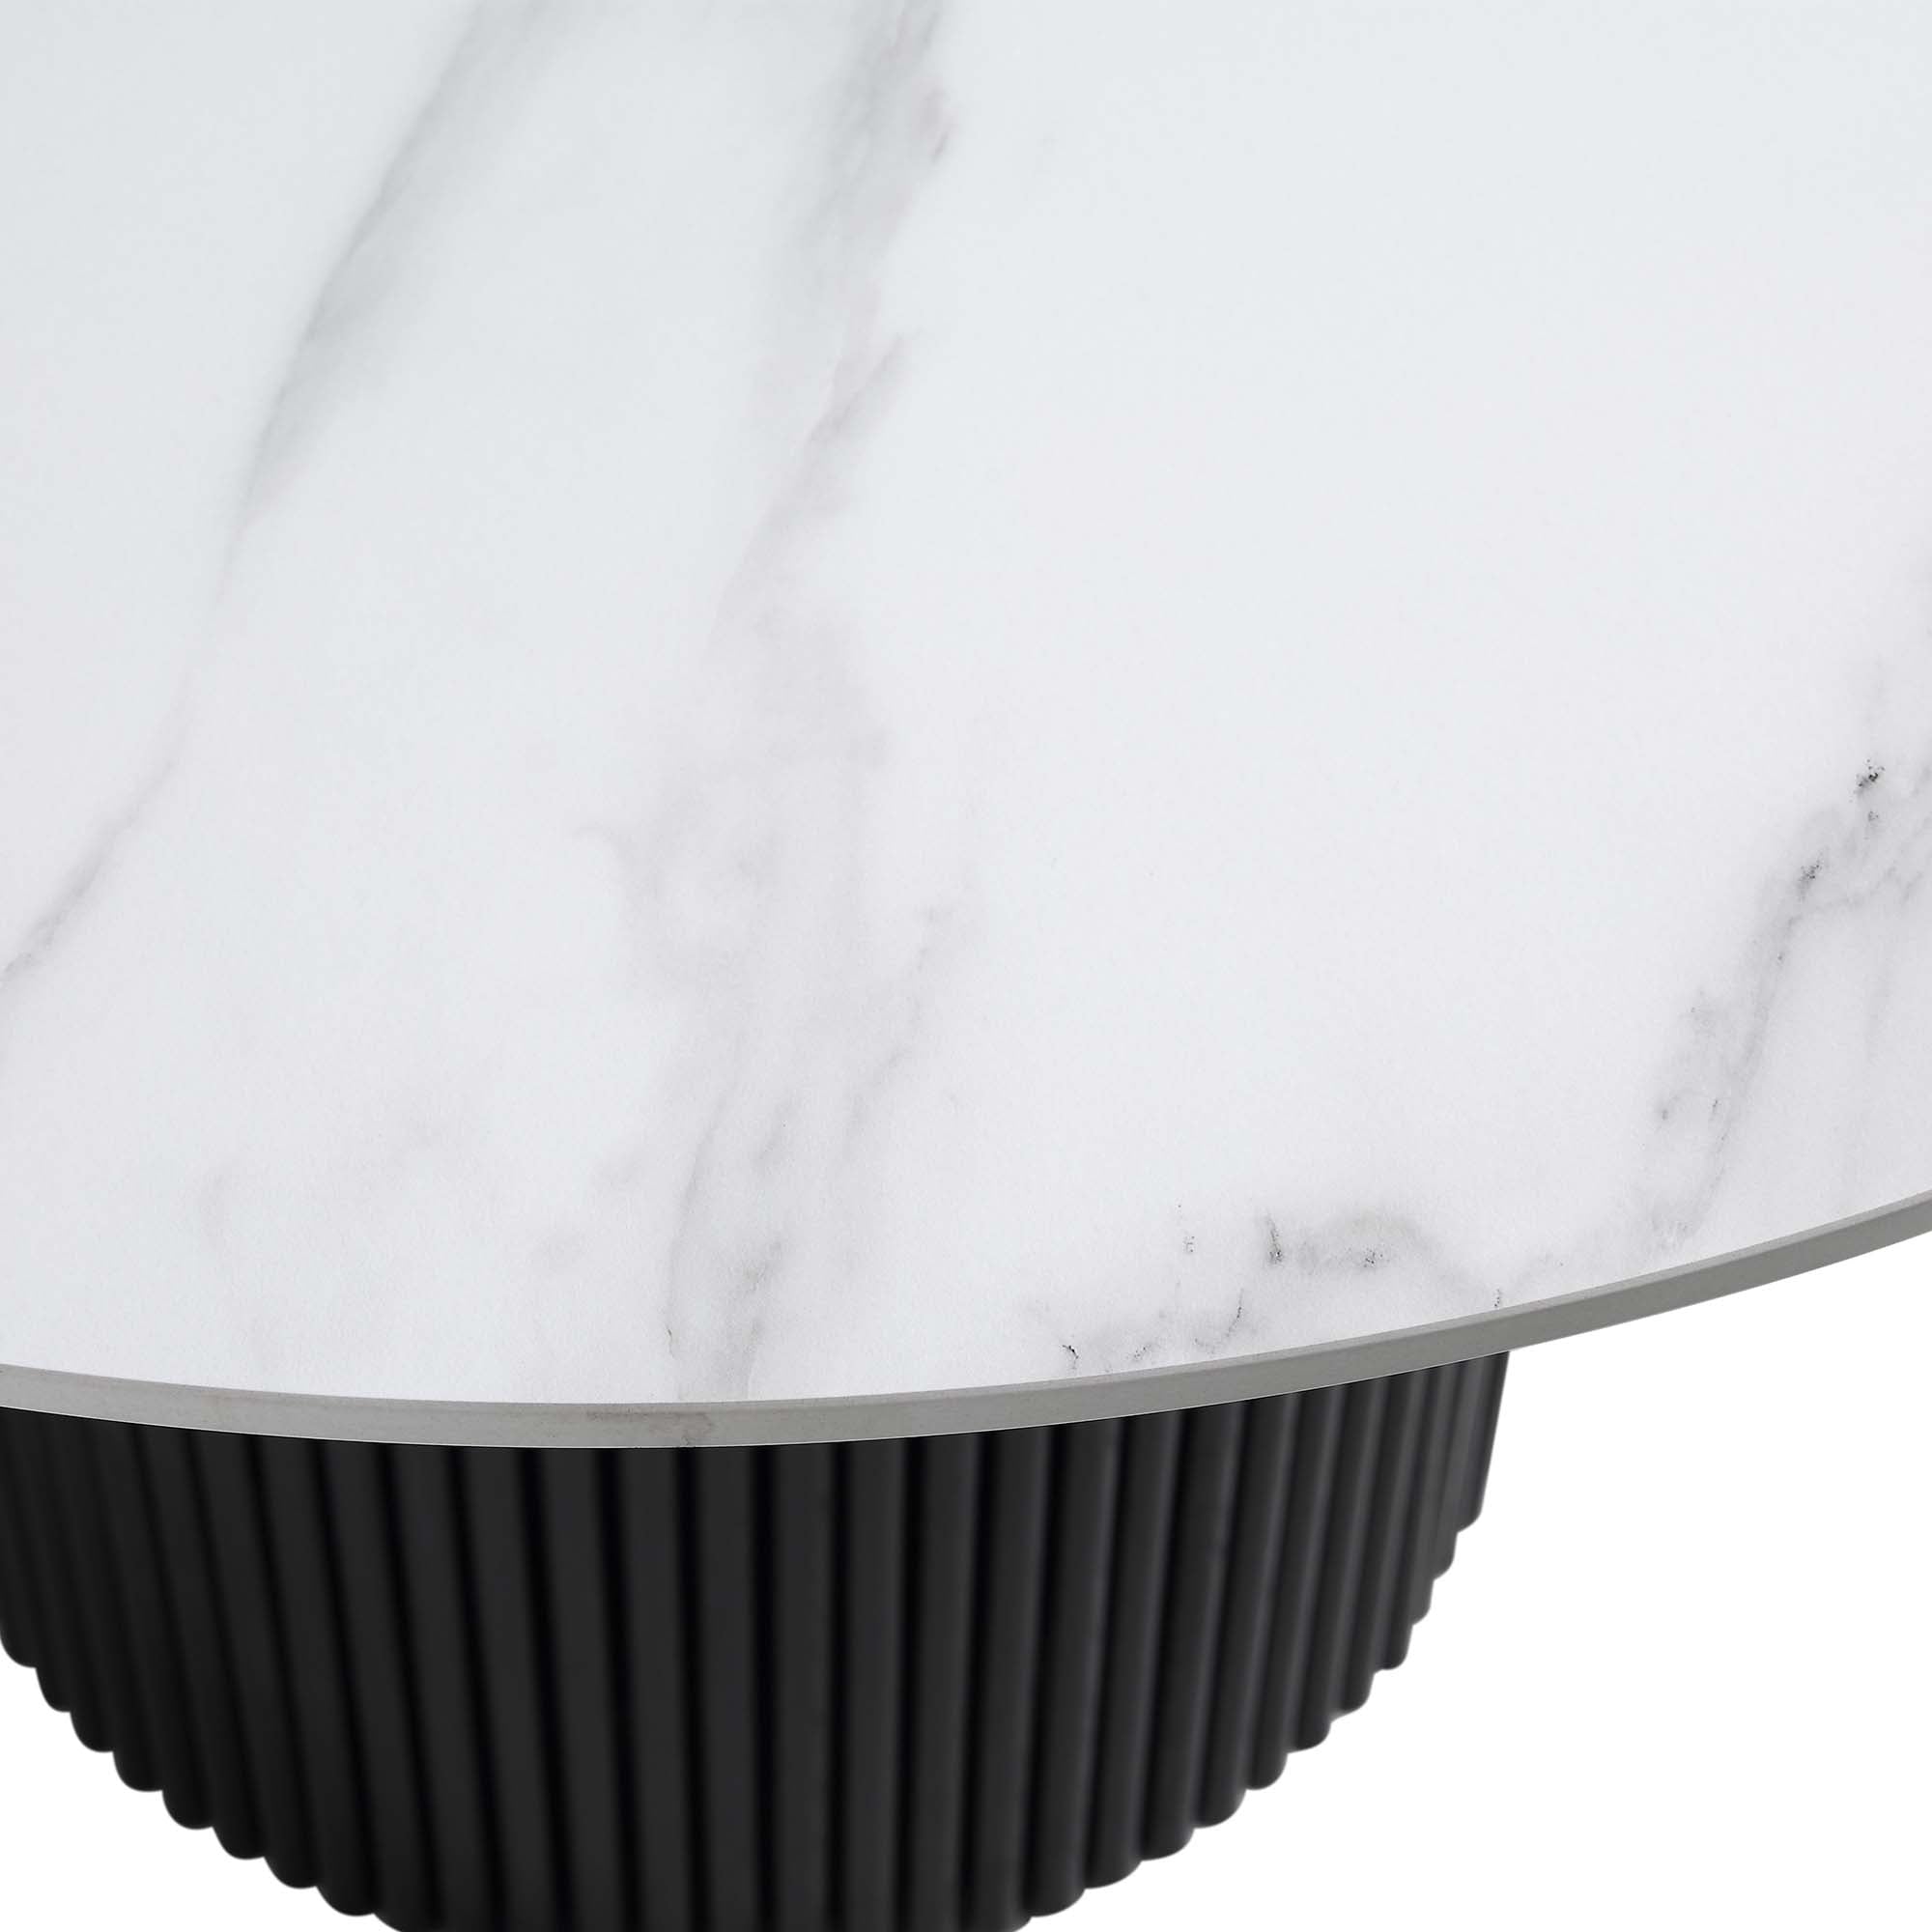 Maru Ceramic Top Black Pedestal Round Dining Table